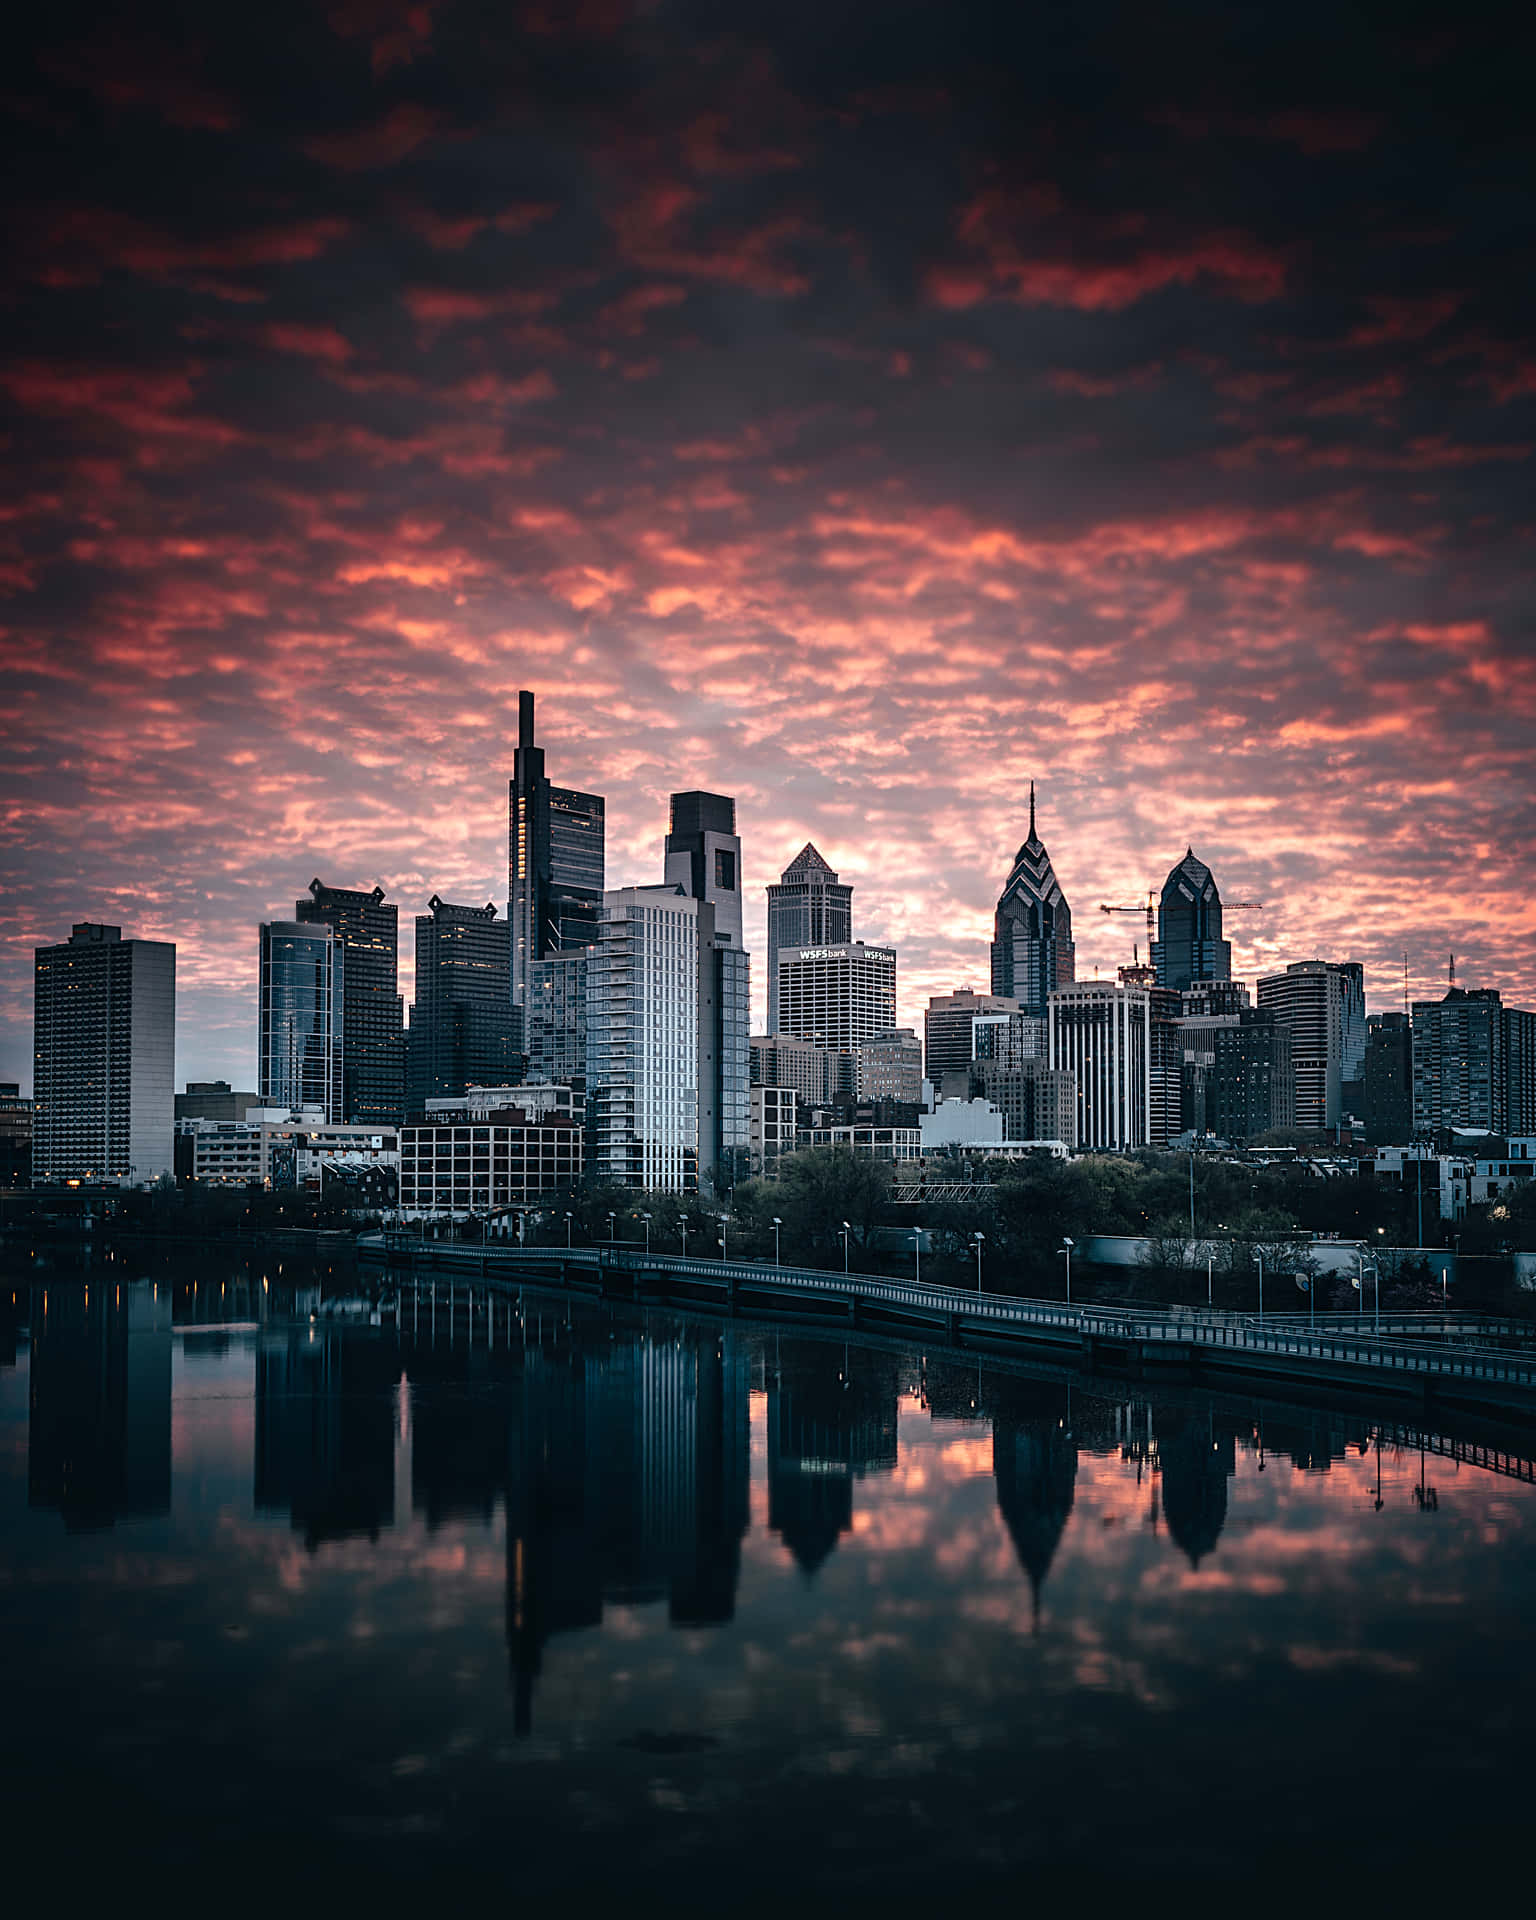 The heart of Philadelphia shines in the night Wallpaper